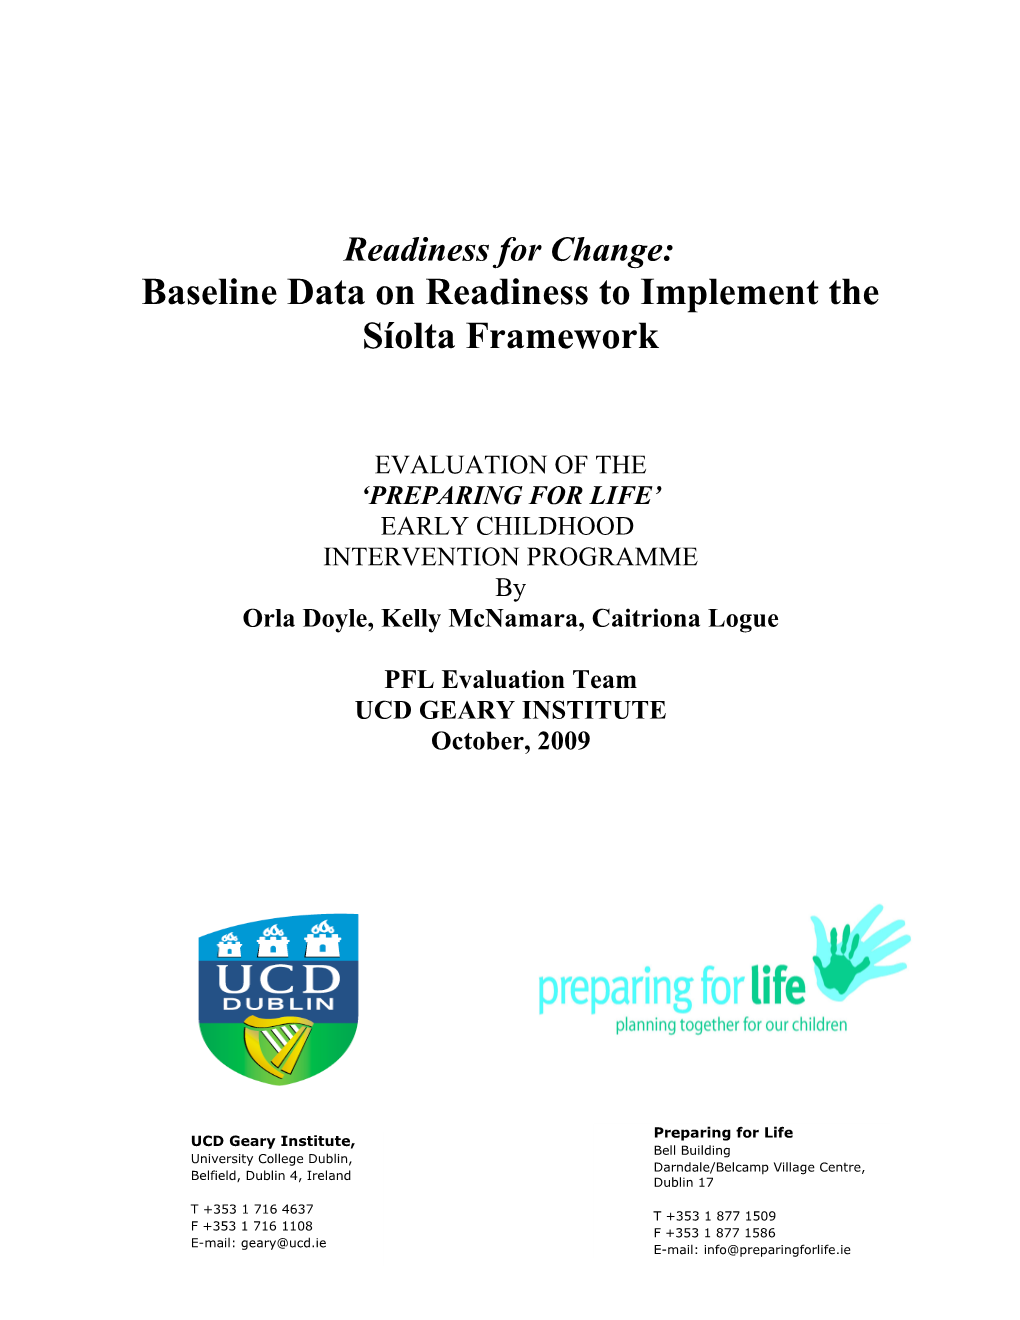 Baseline Data on Readiness to Implement the Síolta Framework